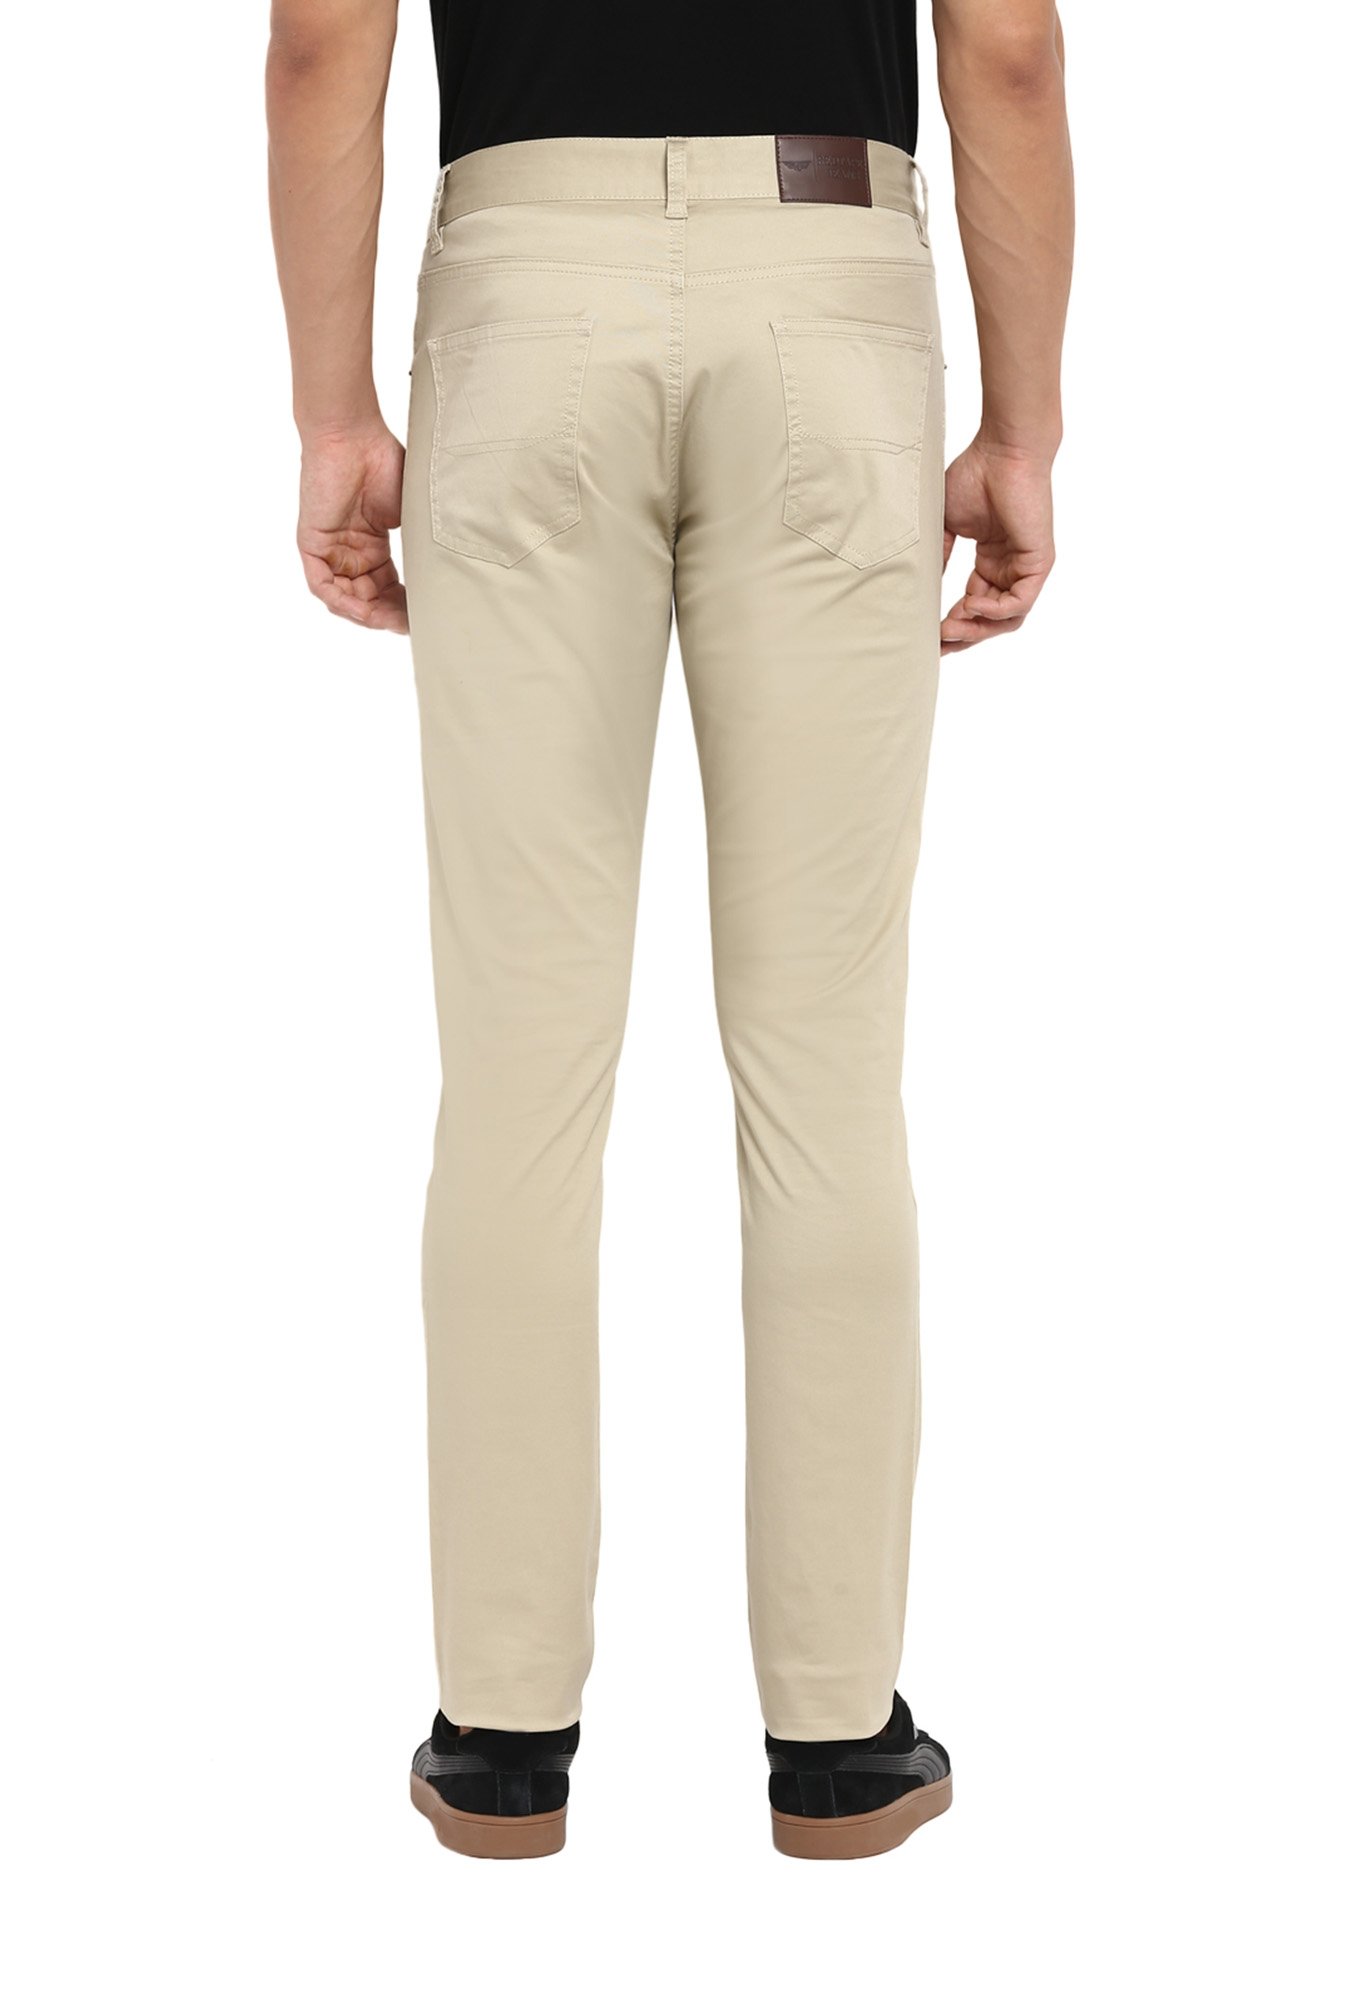 Buy Beige Trousers  Pants for Men by RED TAPE Online  Ajiocom